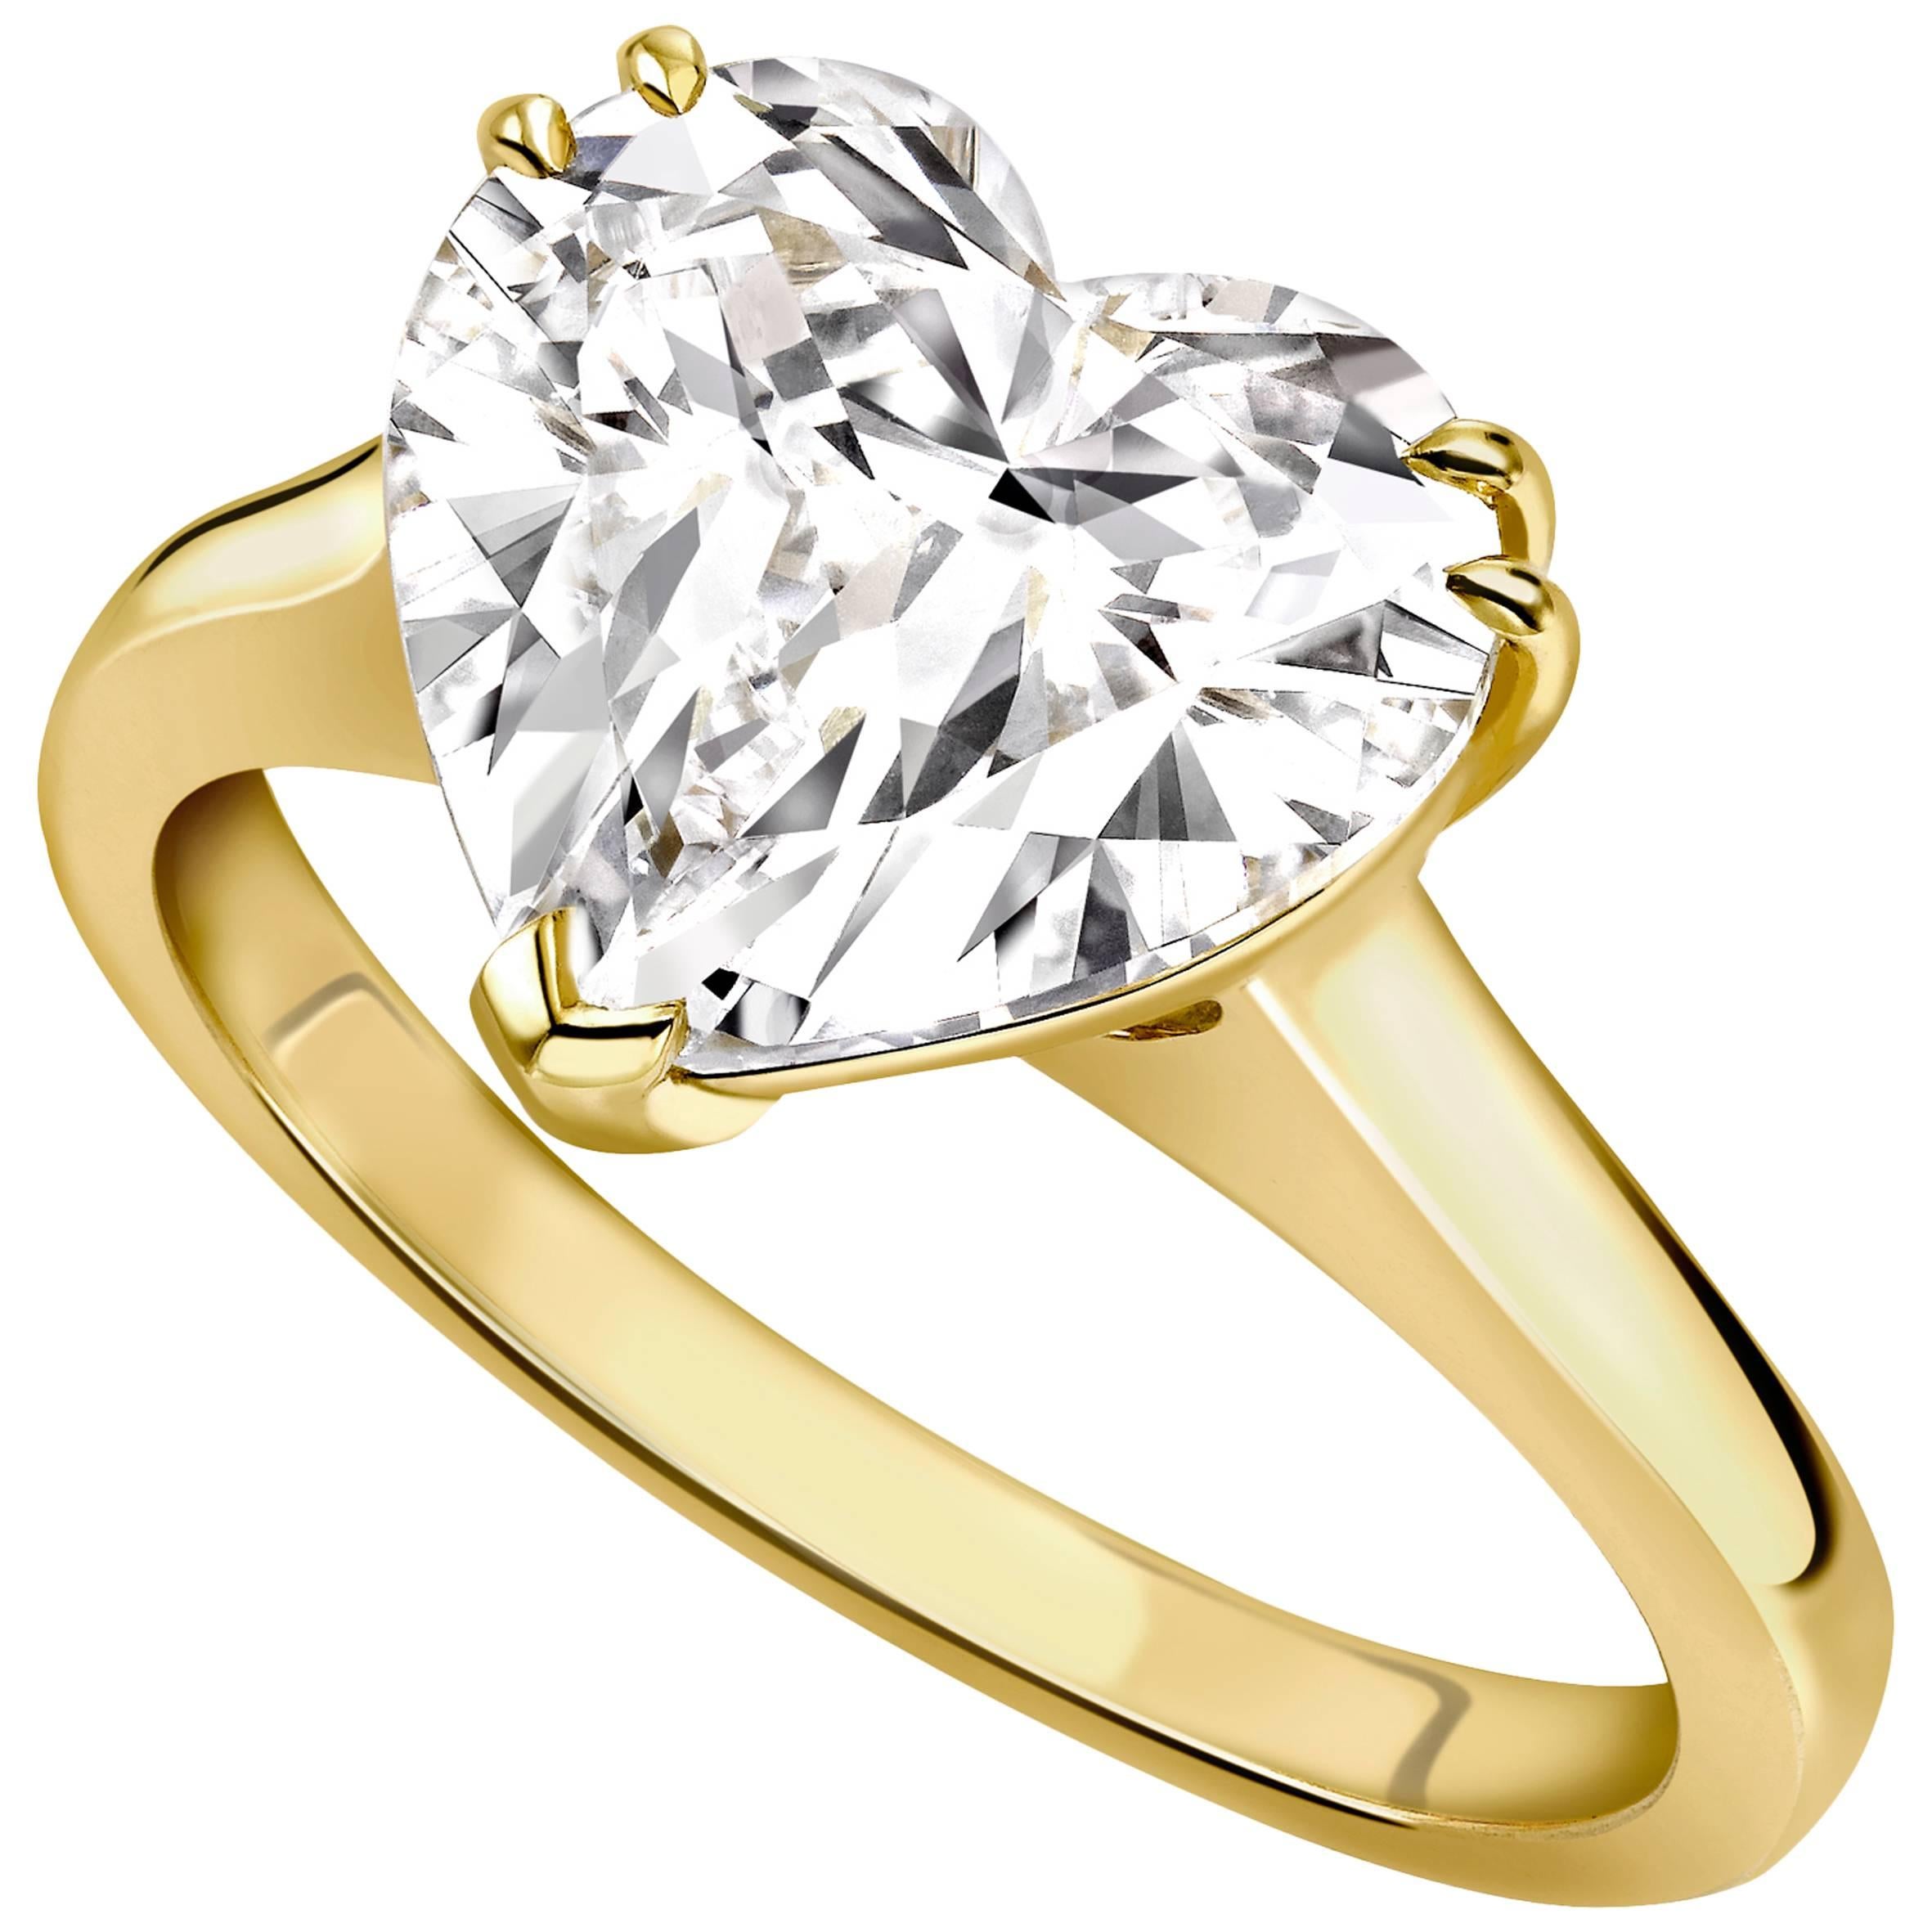 Ana De Costa Yellow Gold 3 Carat Gia Certified Heart White Diamond Ring For Sale